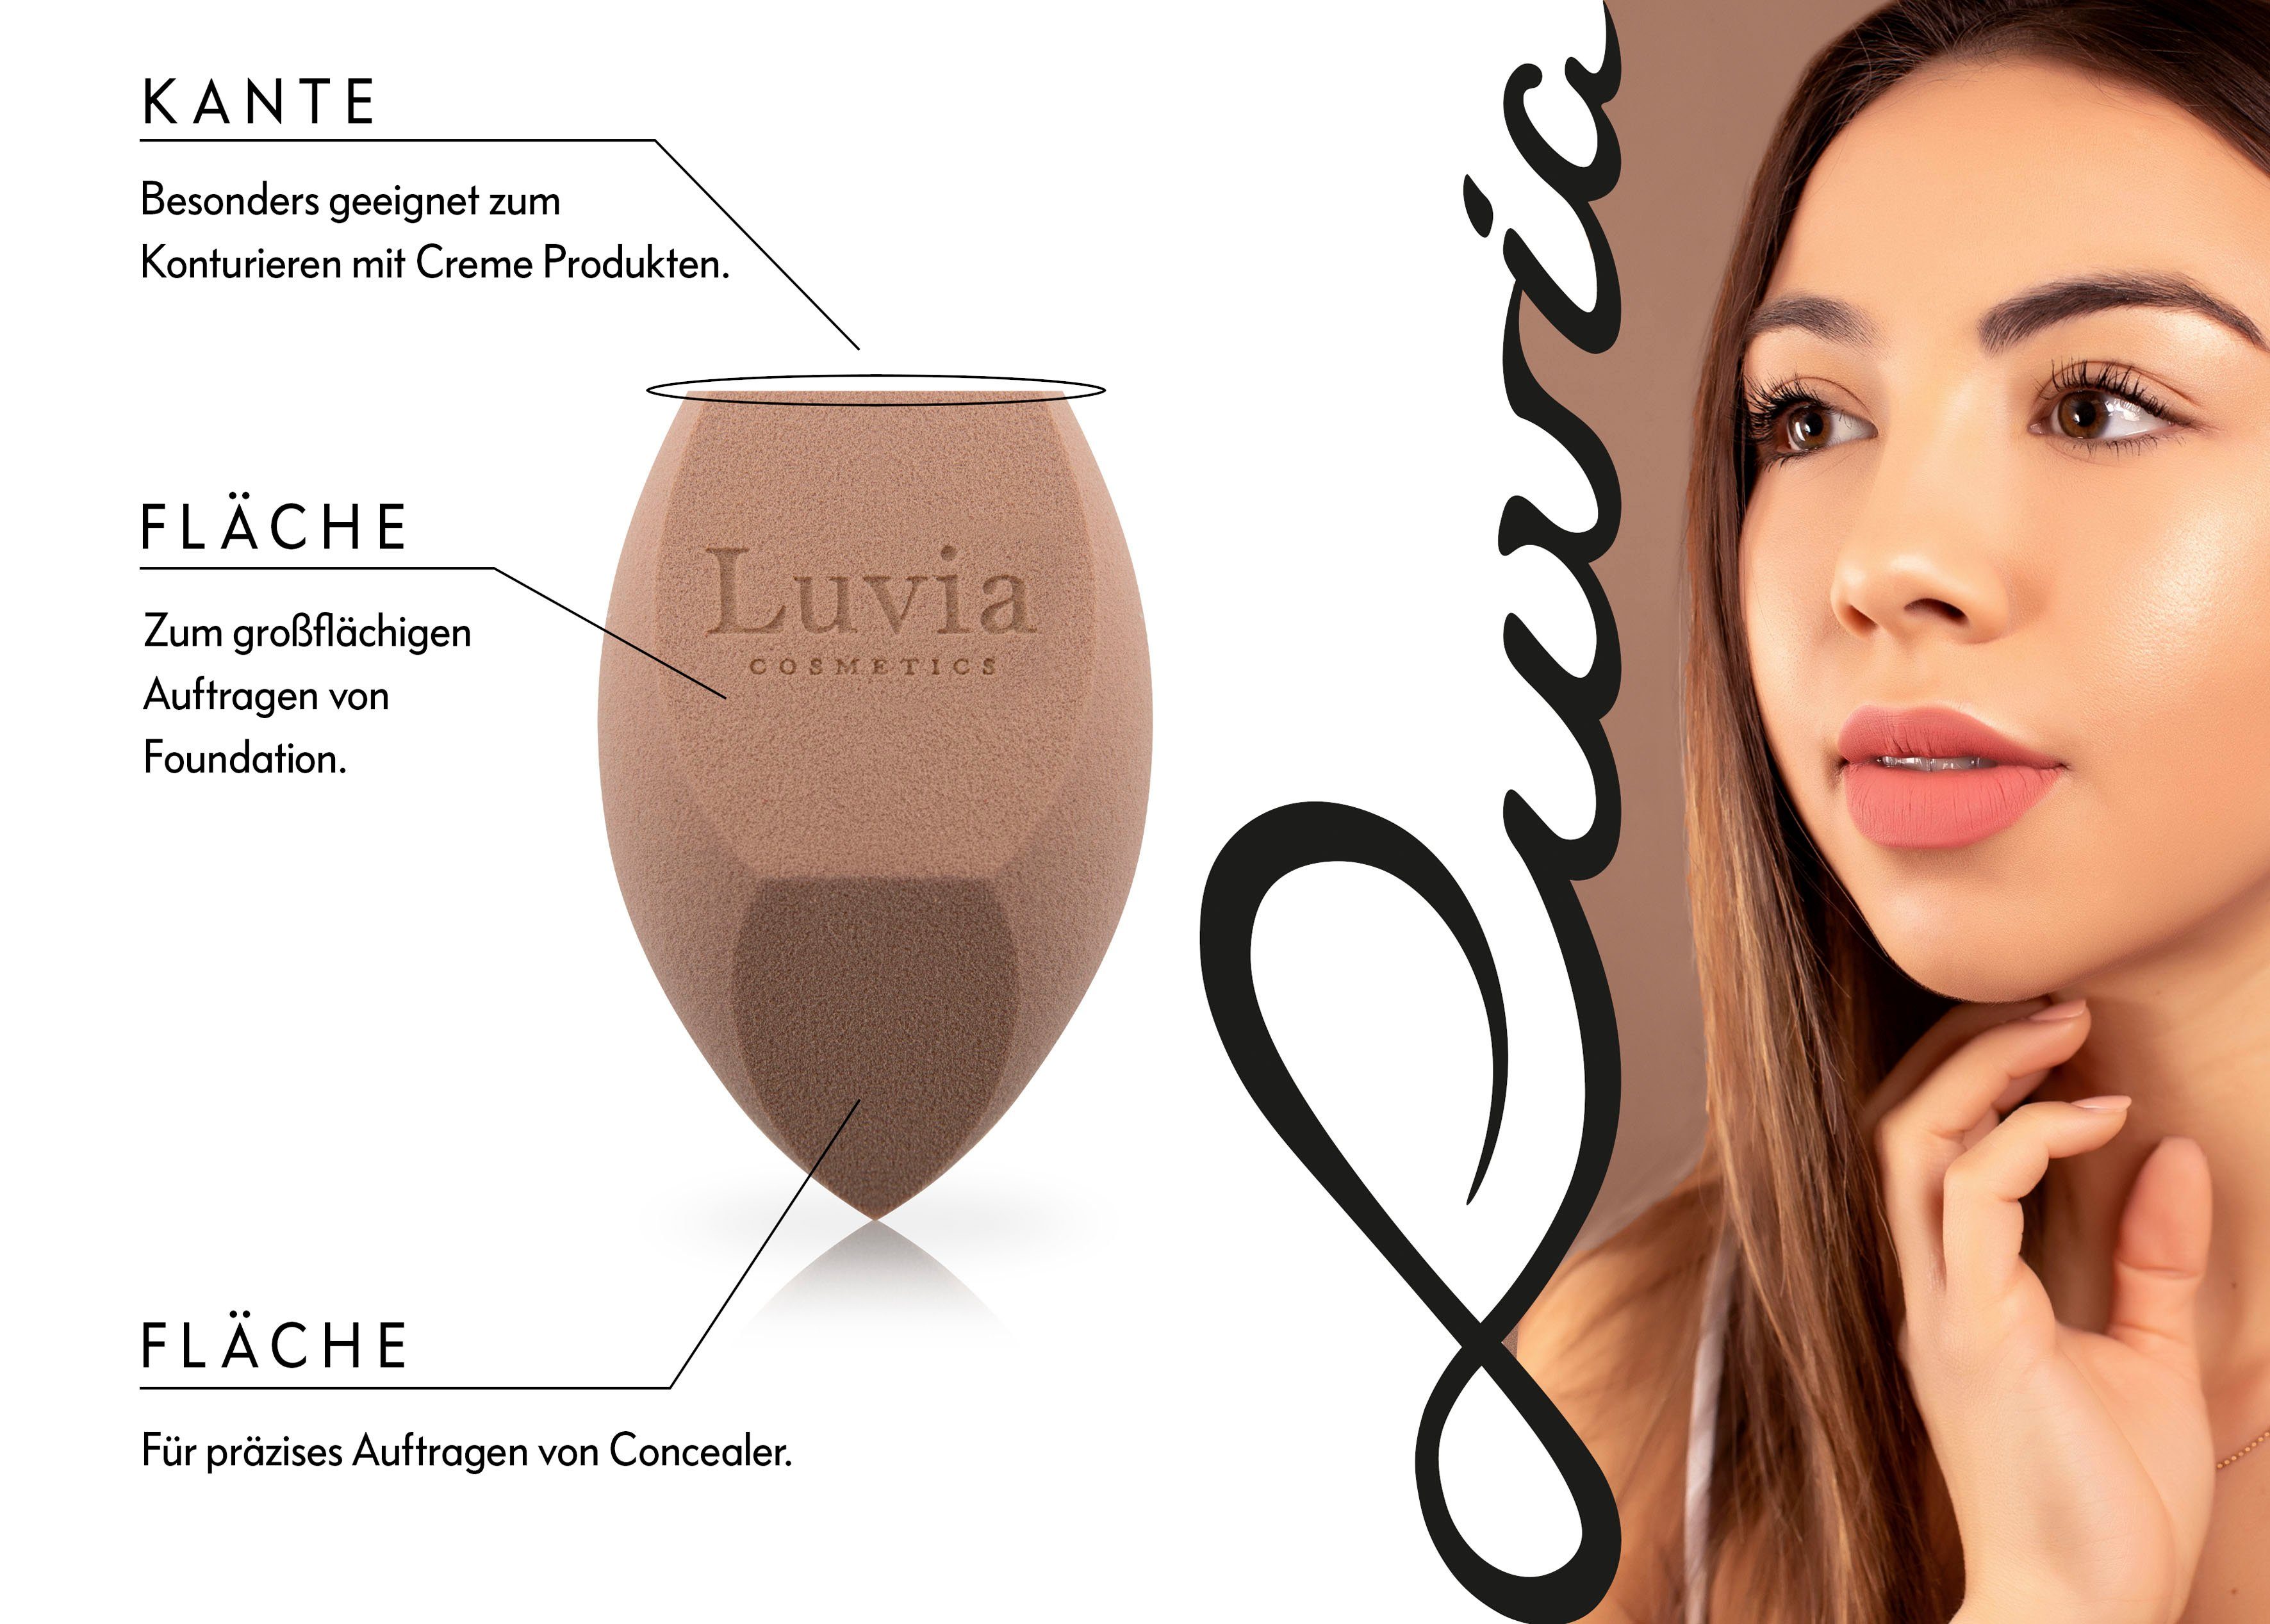 Luvia Cosmetics Make-up Vegan Body Sponge, Schwamm Prime XXL Make-up Schwamm